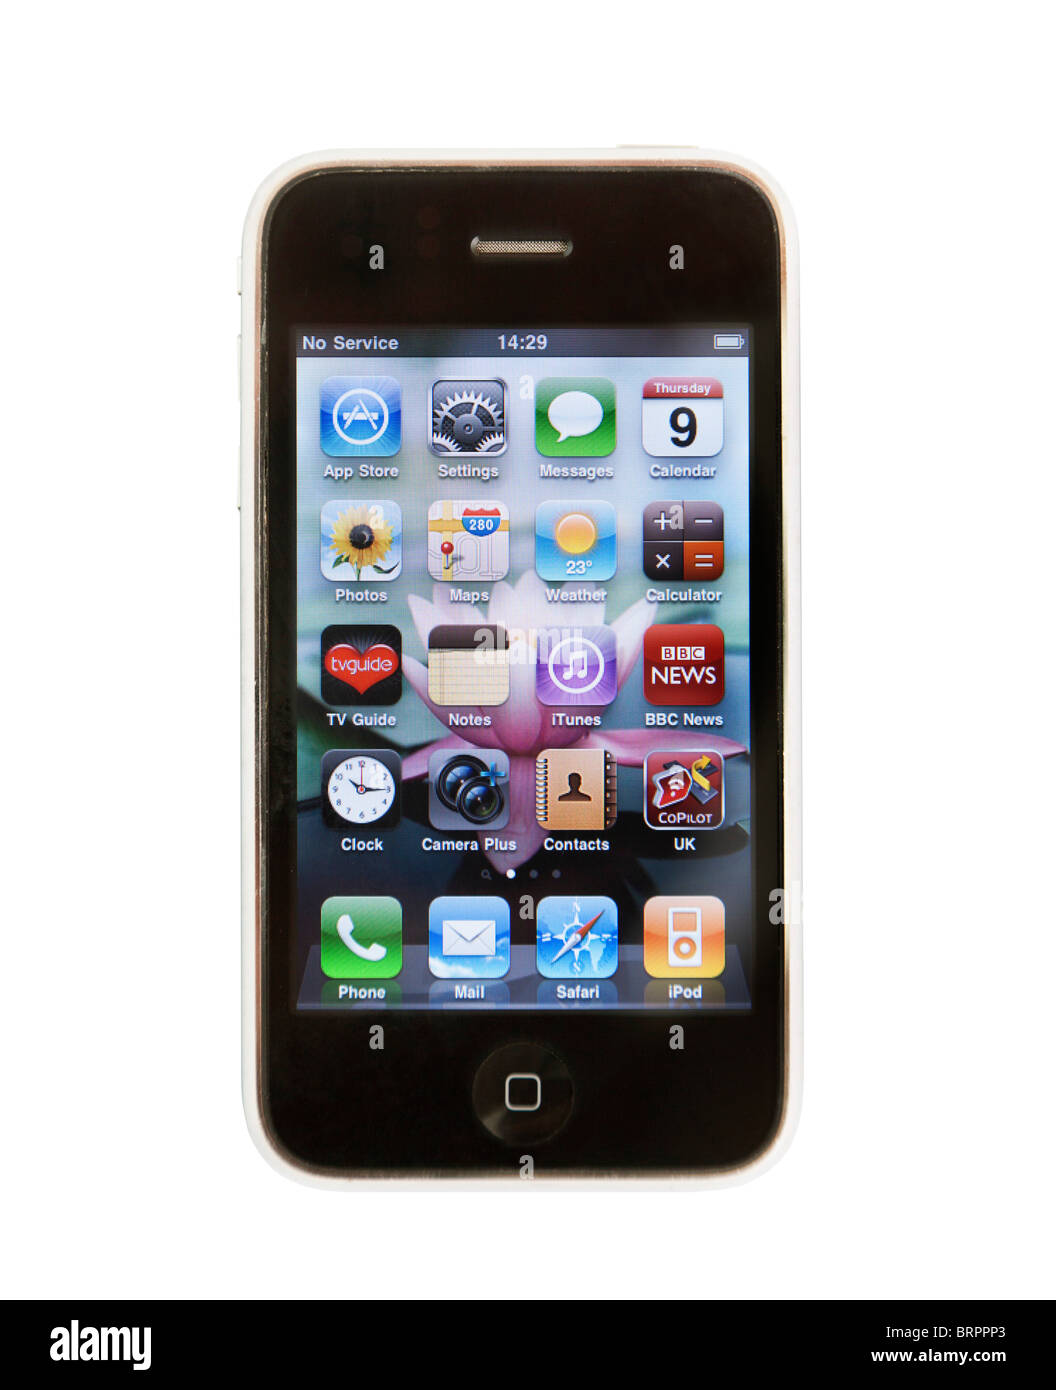 Apple iPhone mobile phone Stock Photo